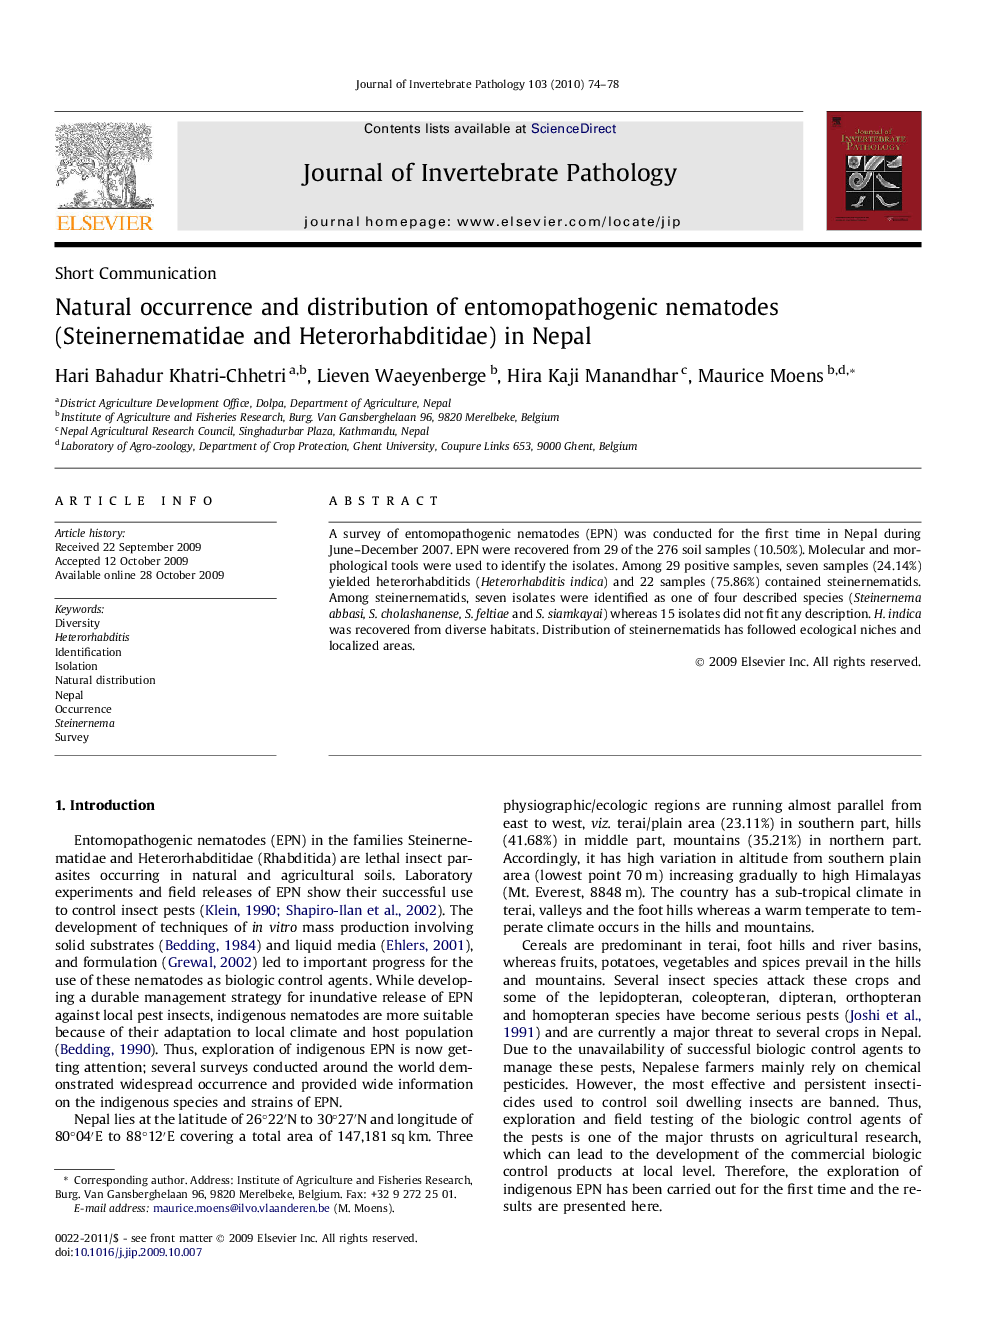 Natural occurrence and distribution of entomopathogenic nematodes (Steinernematidae and Heterorhabditidae) in Nepal